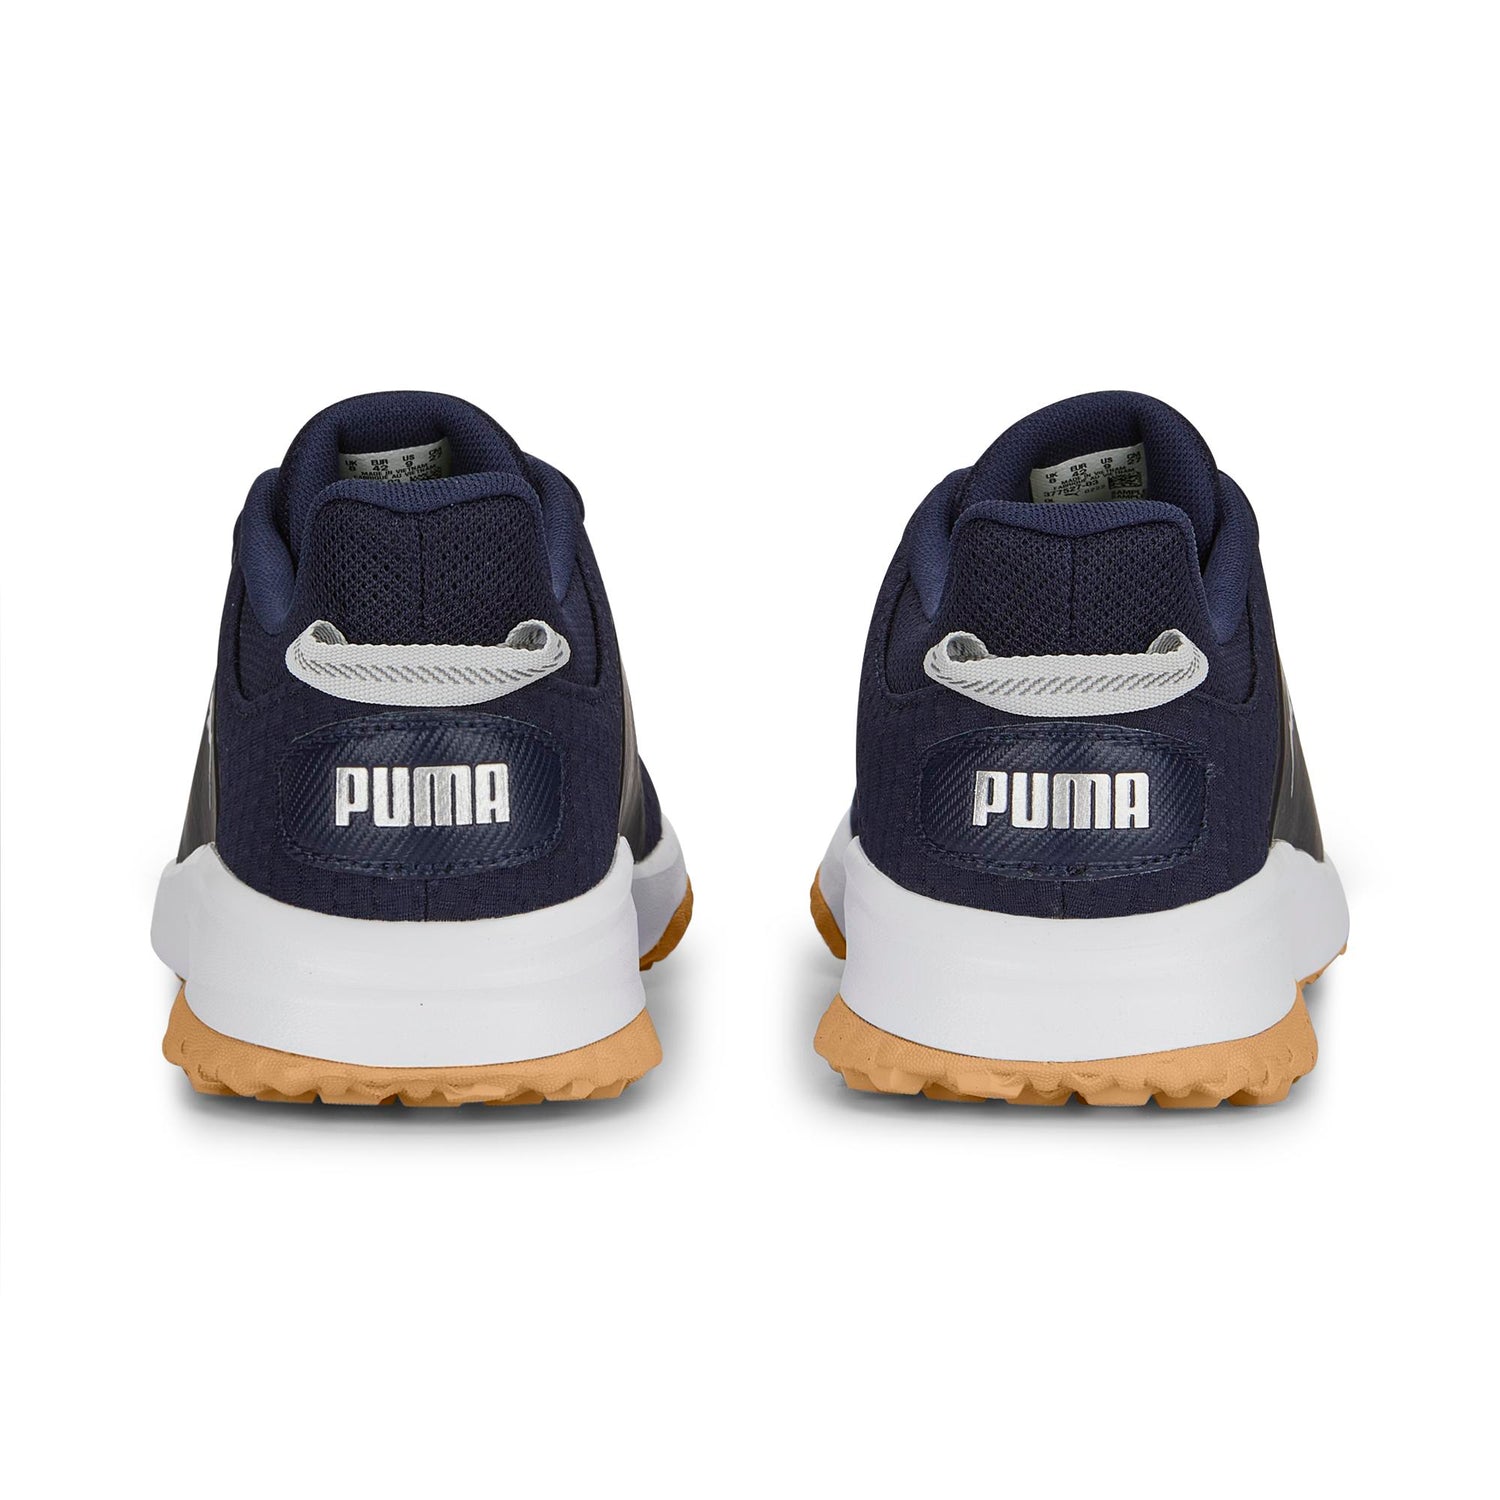 Puma Navy / Puma Silver / Gum